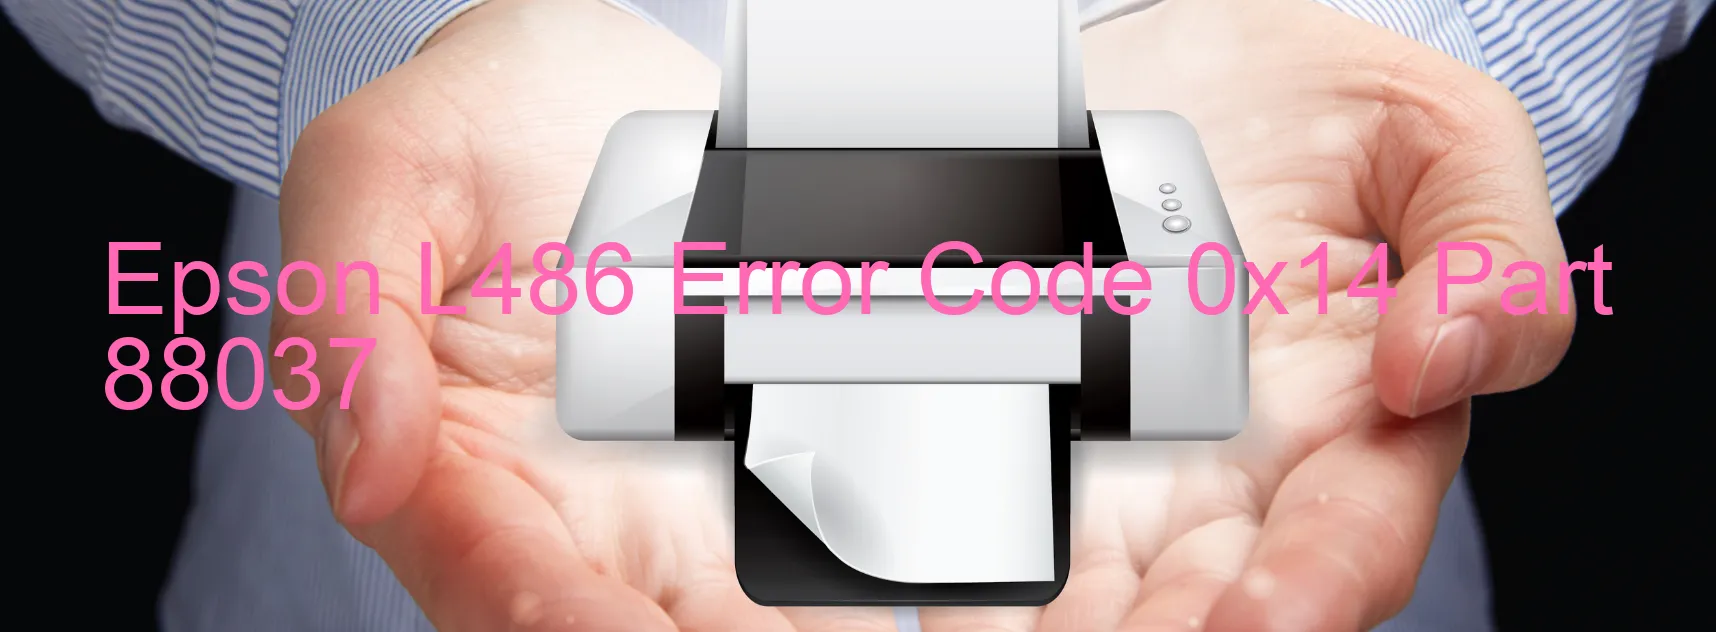 Epson L486 Error Code 0x14 Part 88037